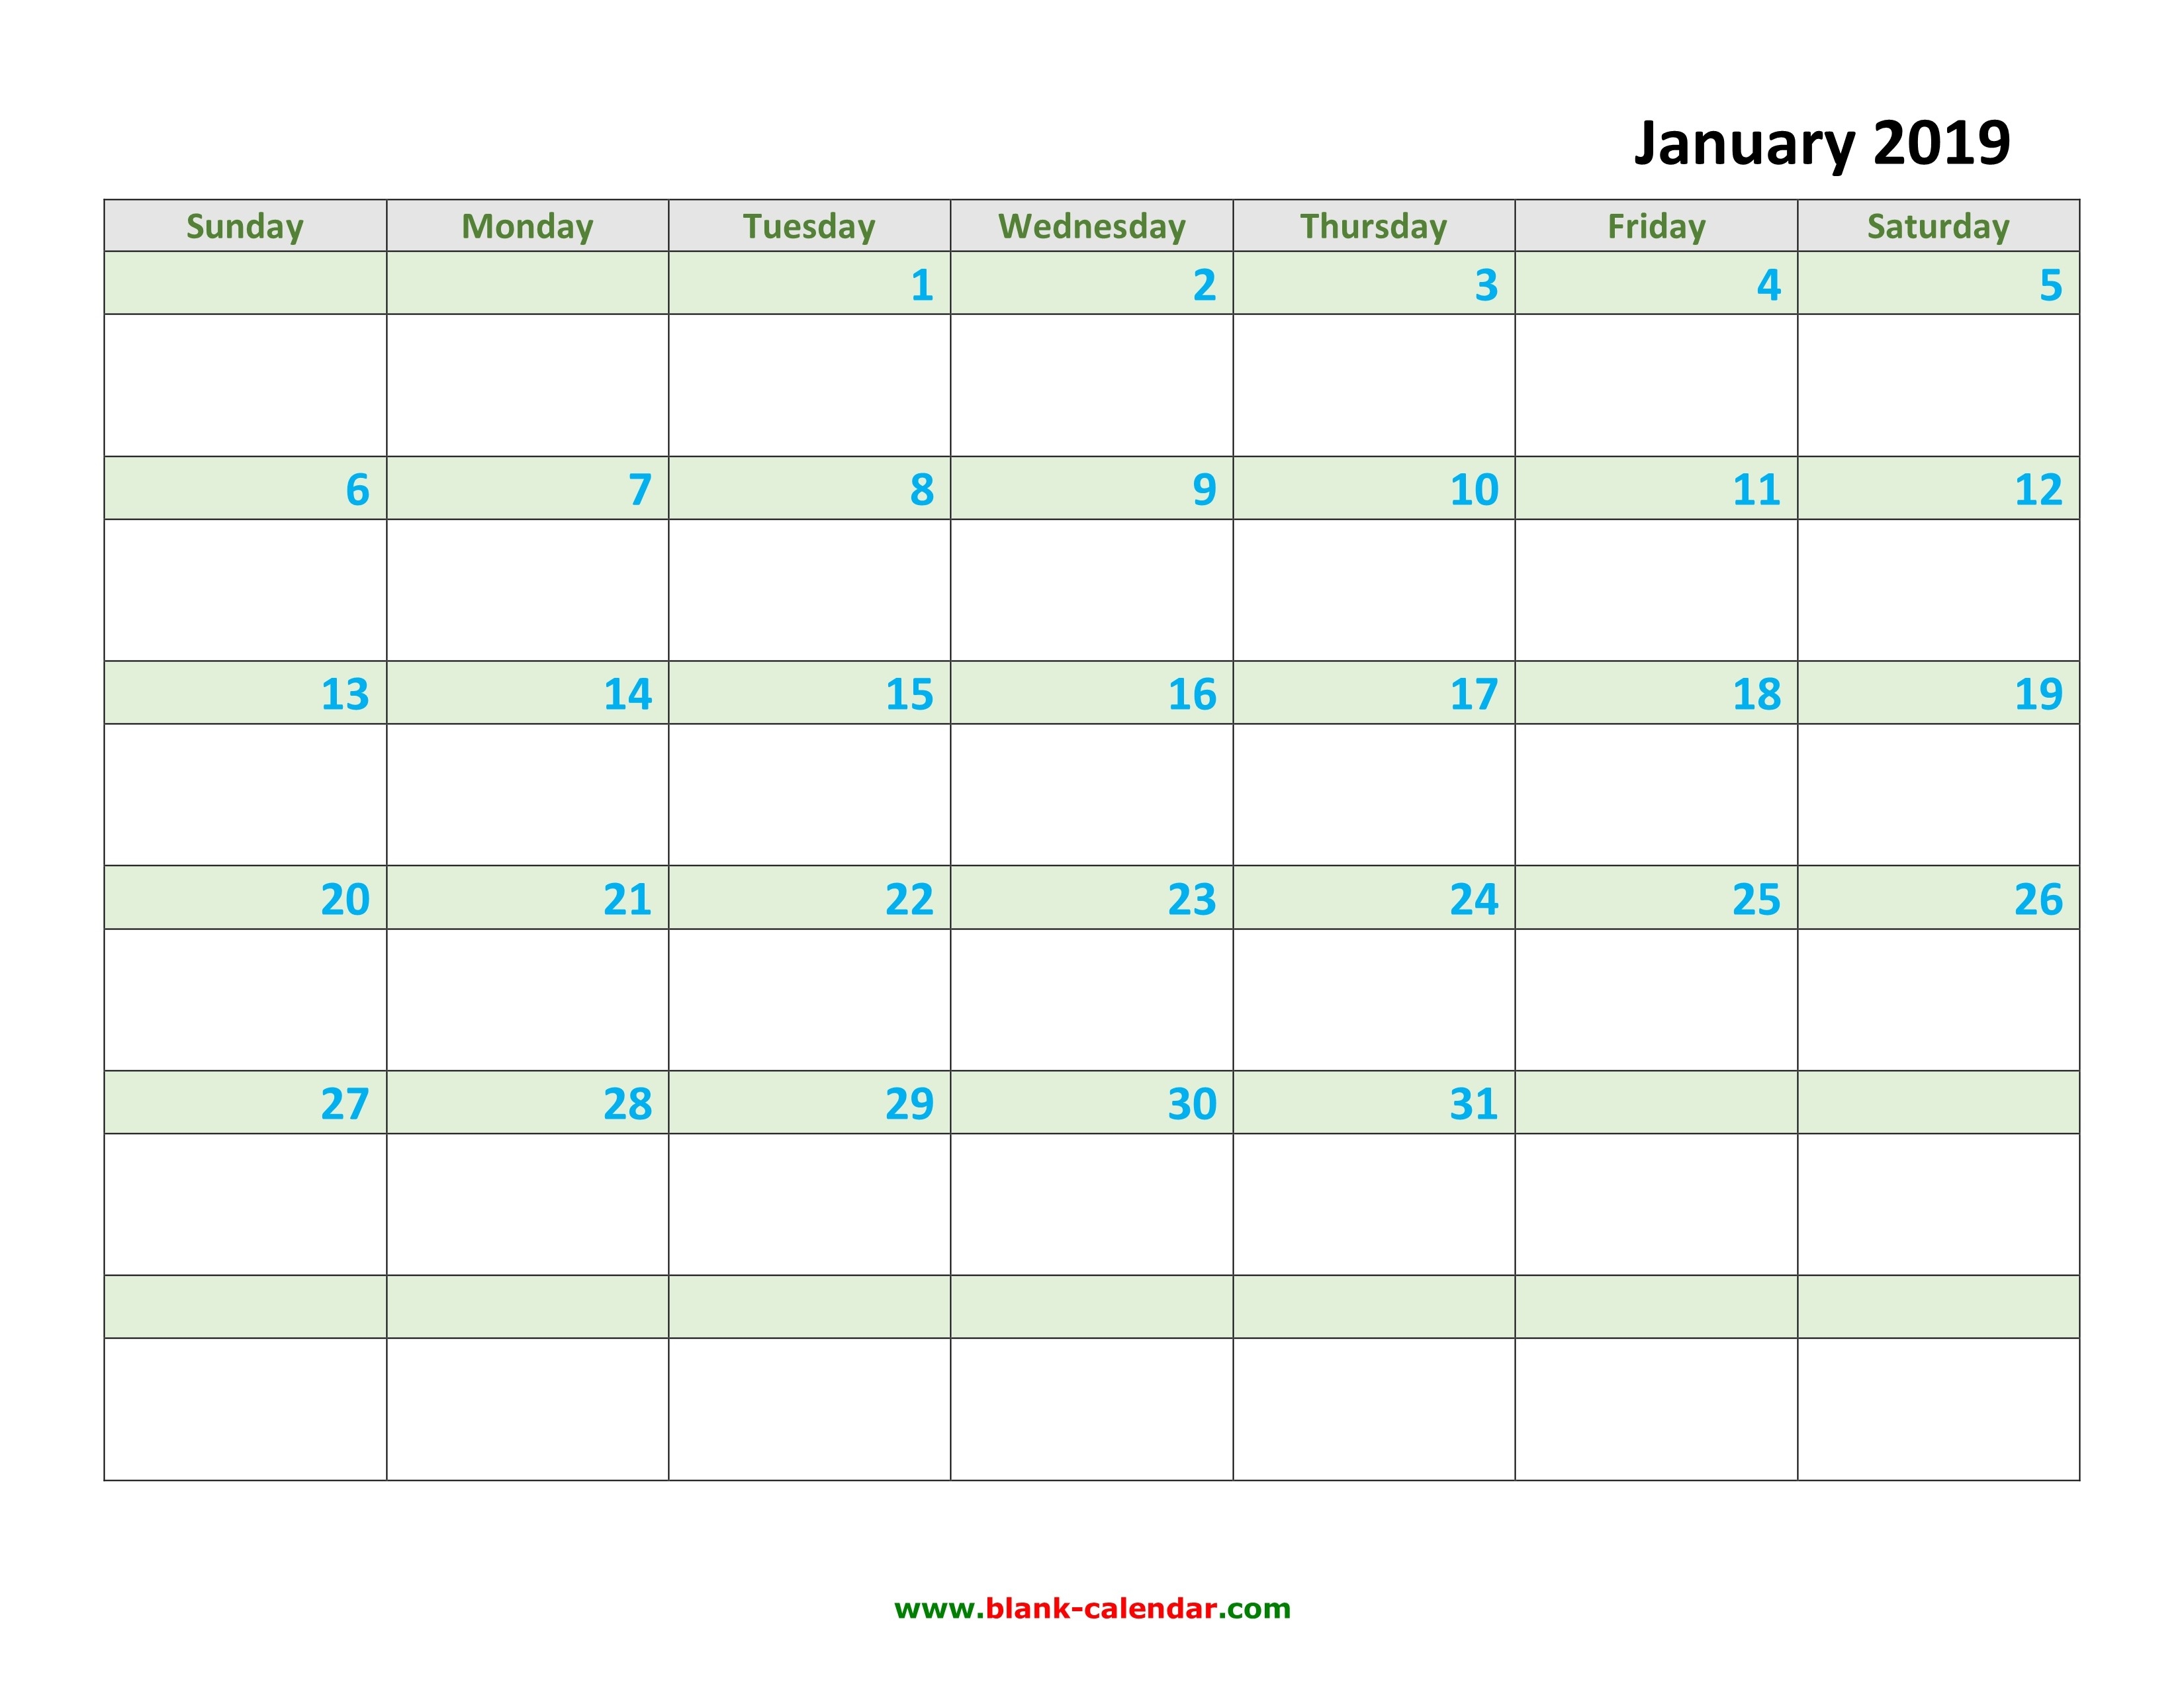 Monthly Calendar That Can Be Edited | Calendar Template ...